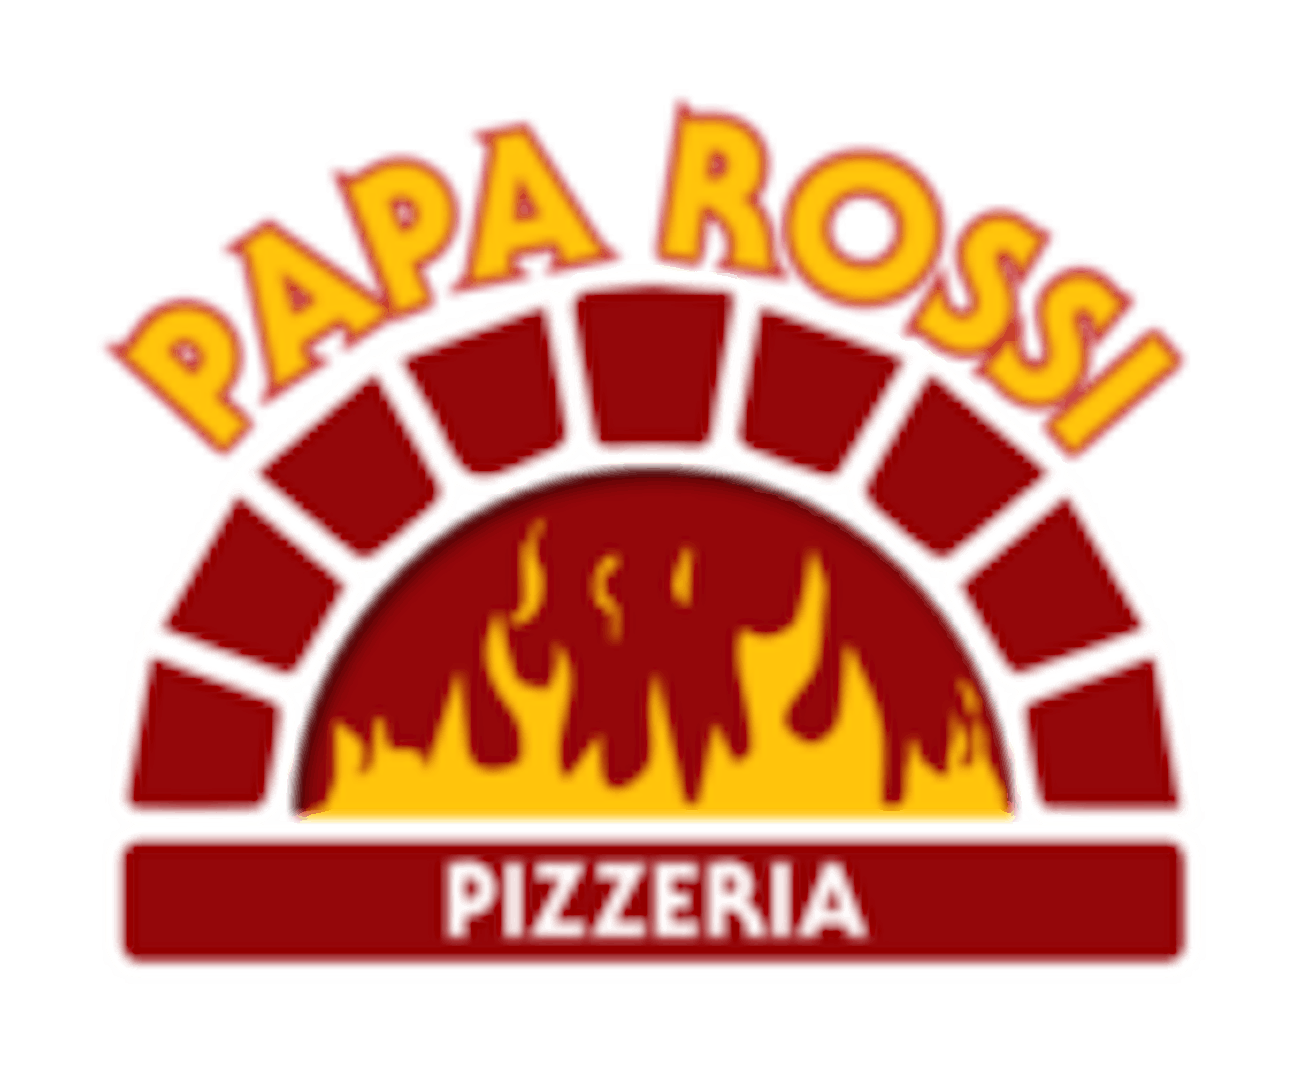 Papa Rossi's Pizzeria